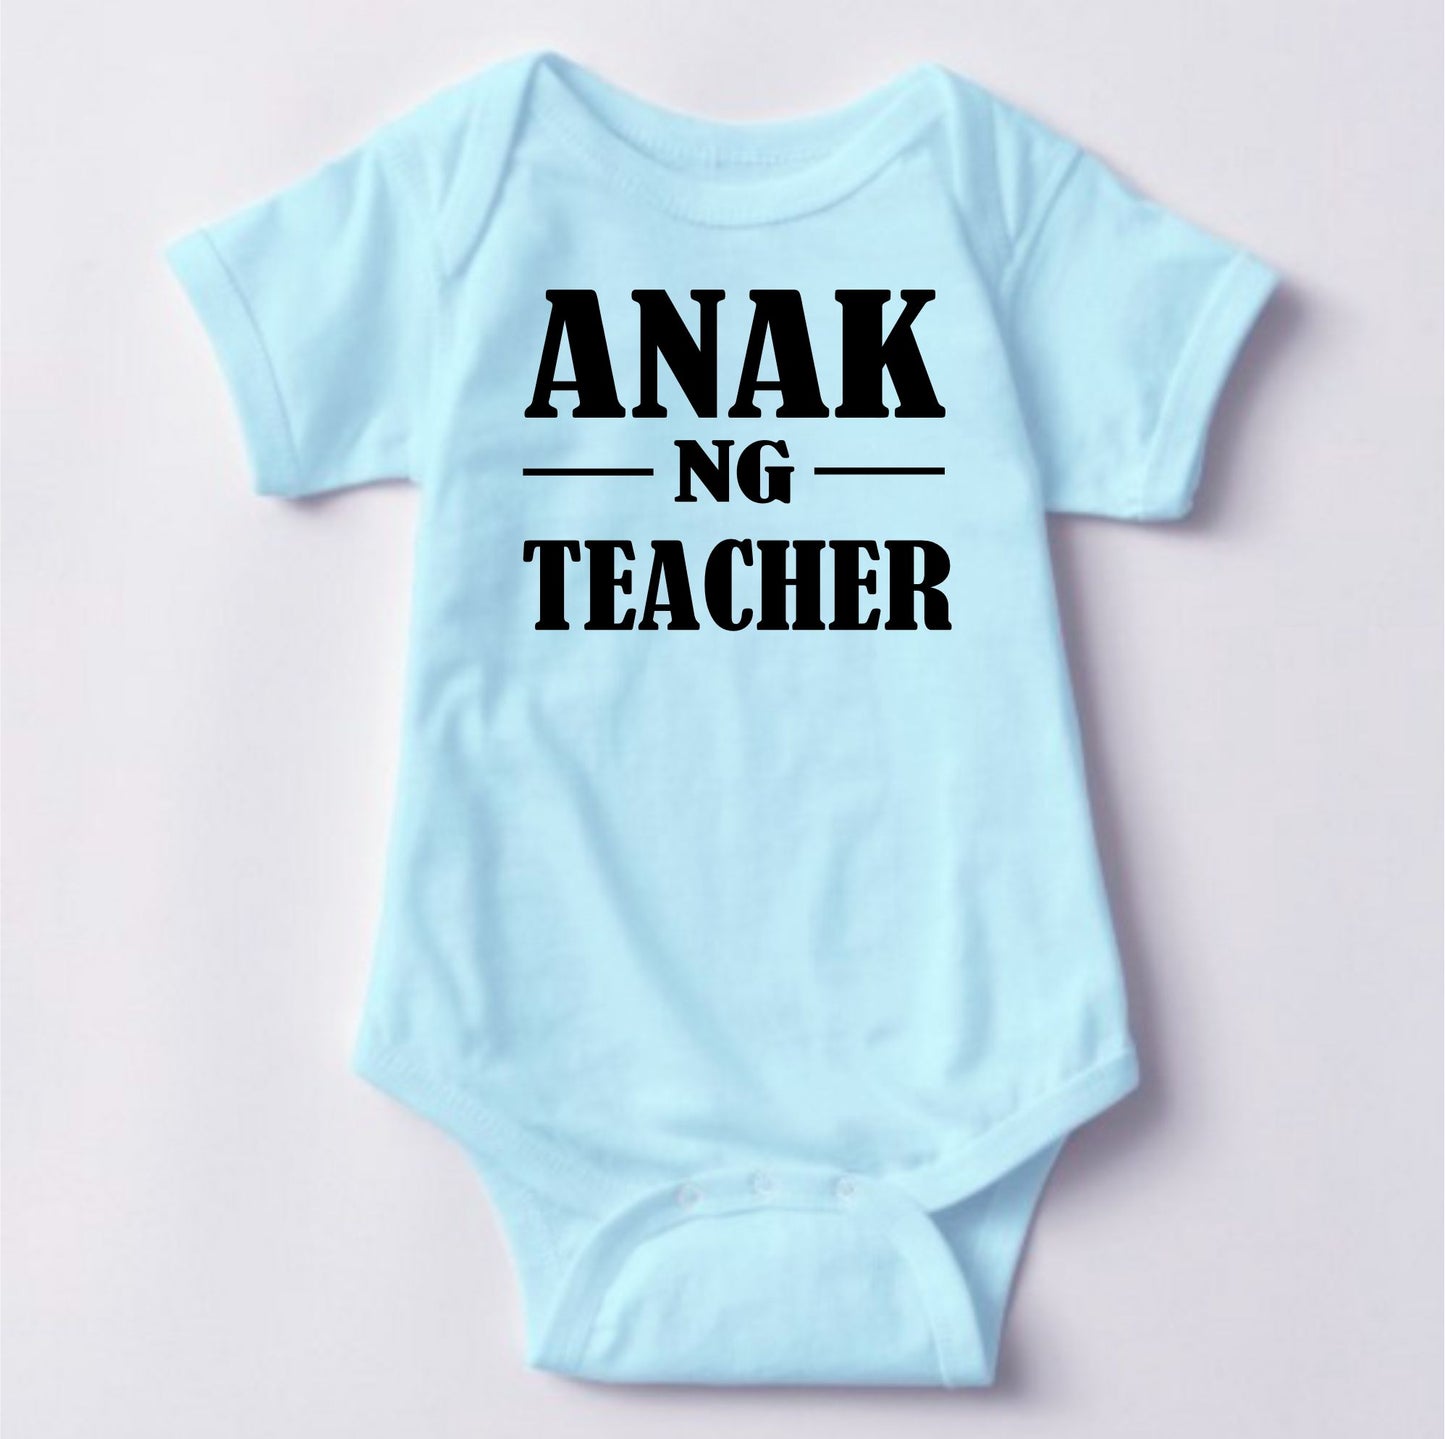 Baby Statement Onesies - Anak ng Teacher